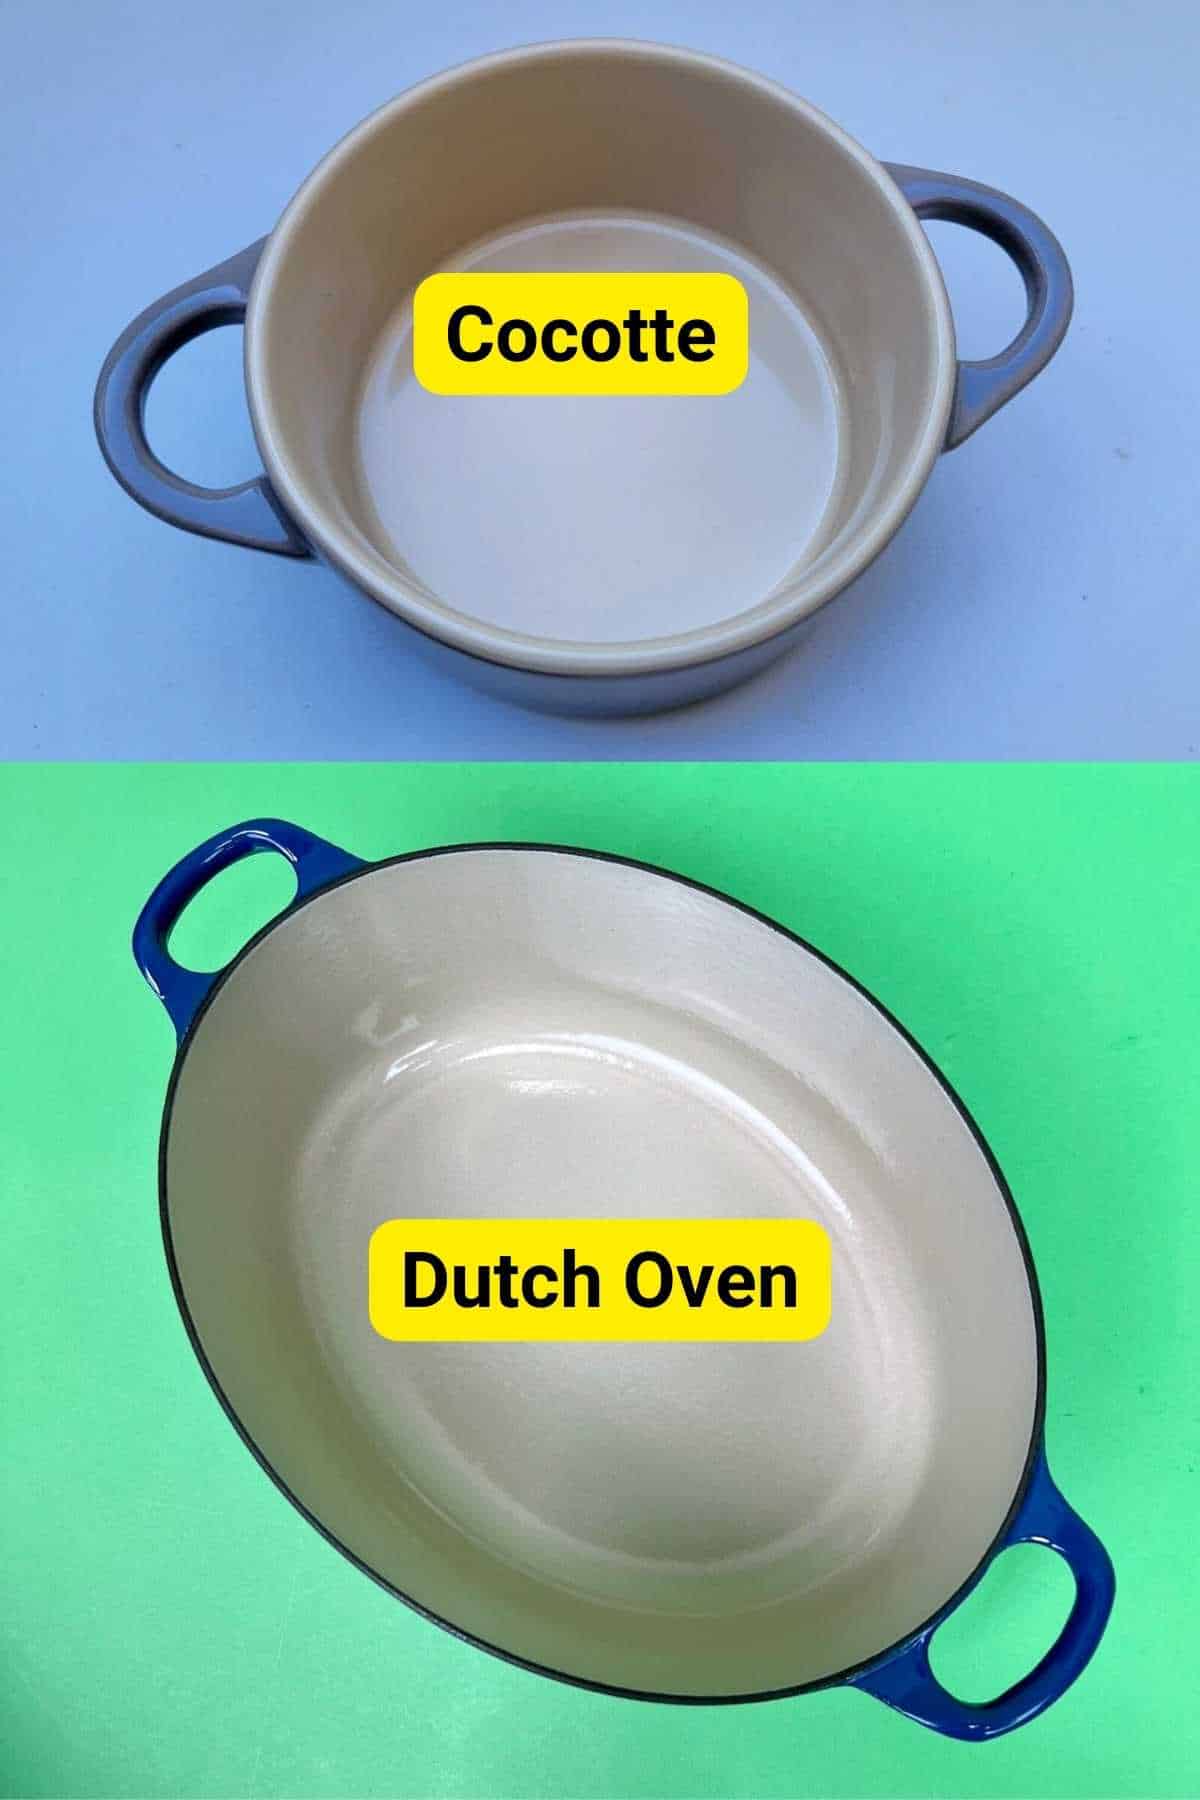 Cocotte vs Dutch Oven